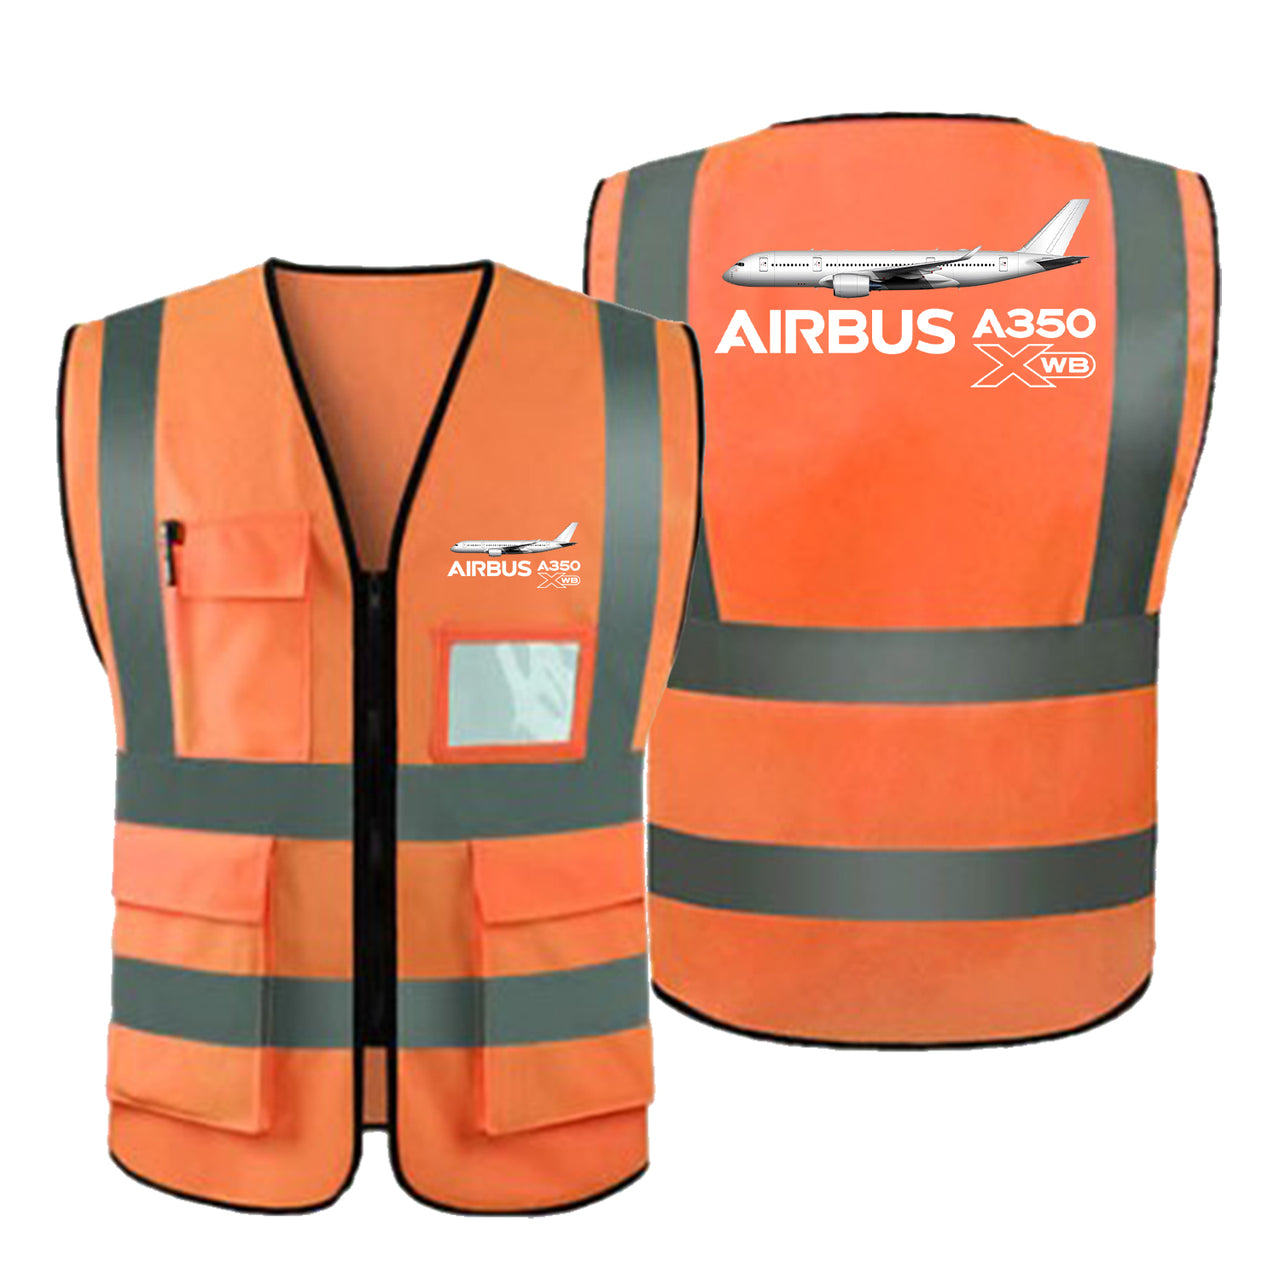 The Airbus A350 WXB Designed Reflective Vests